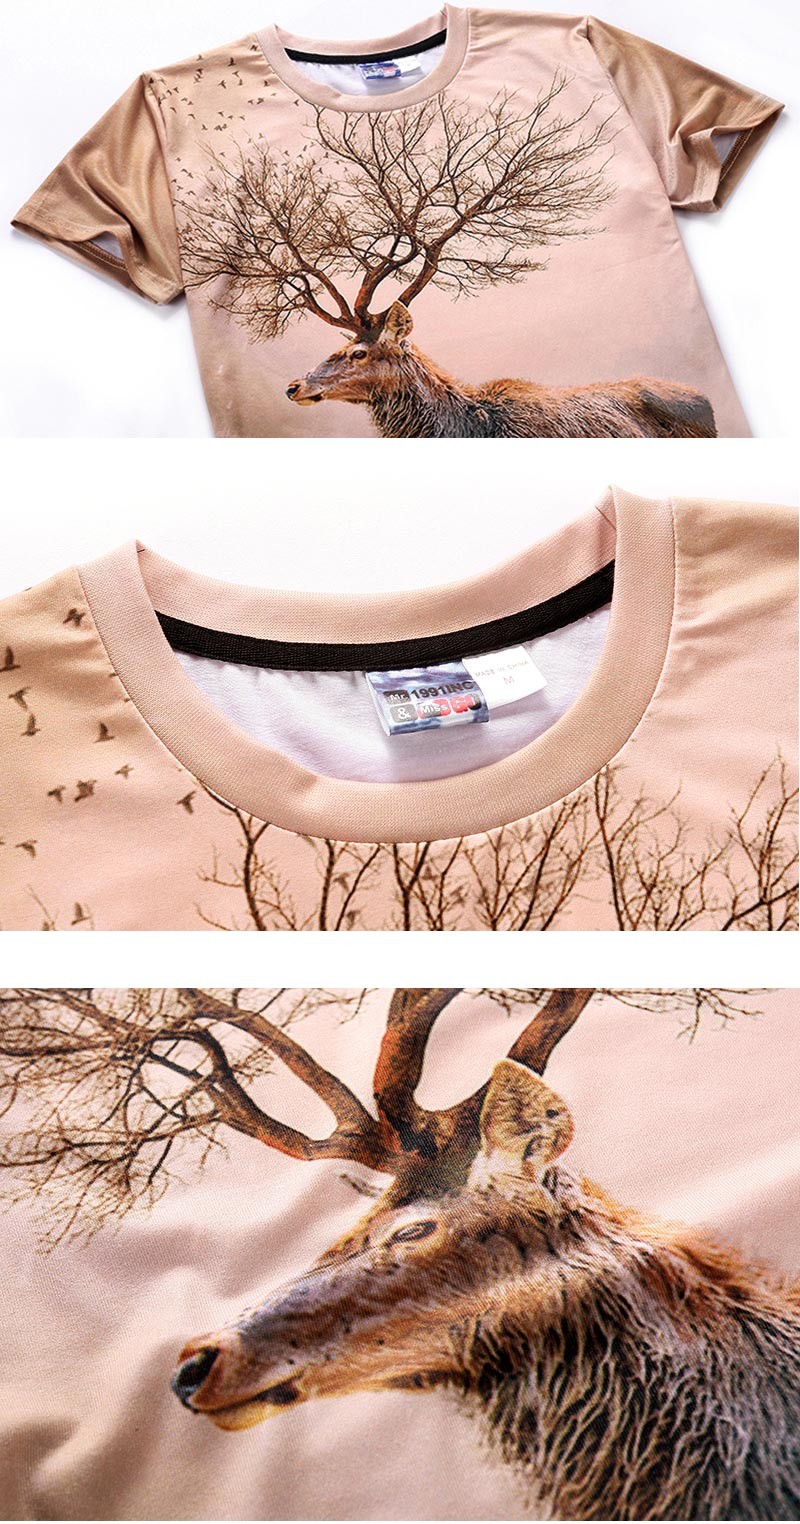 Mr1991INC-Very-Nice-Model-T-shirt-menwomen-3d-t-shirt-funny-print-autumn-tree-antlers-deer-summer-to-32688714673